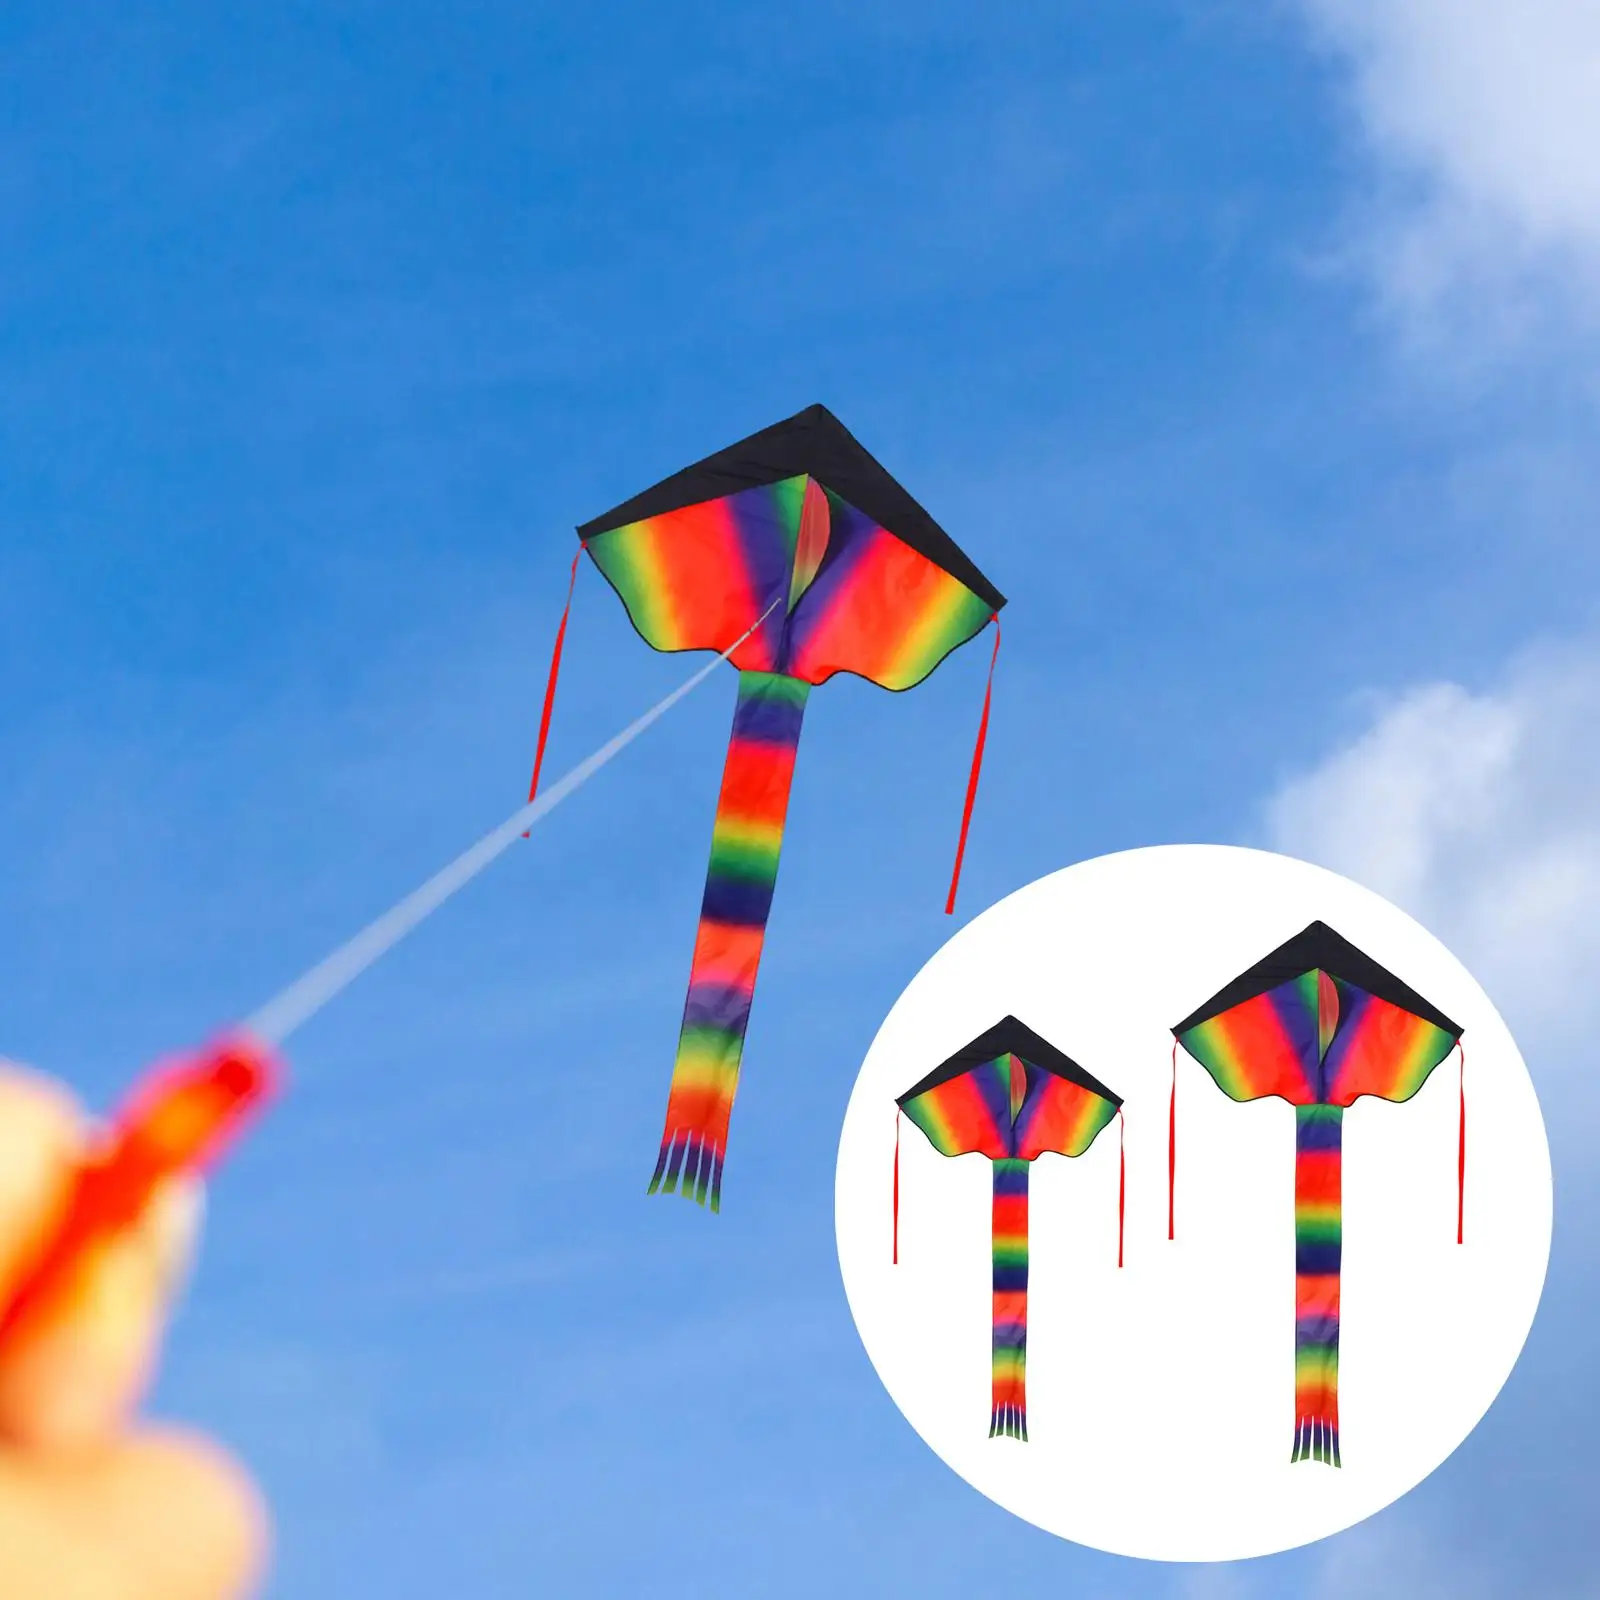 Delta Kites Fly Kite Flying Toys Kite Triangle Kite for Kids Adults Activities Beginner